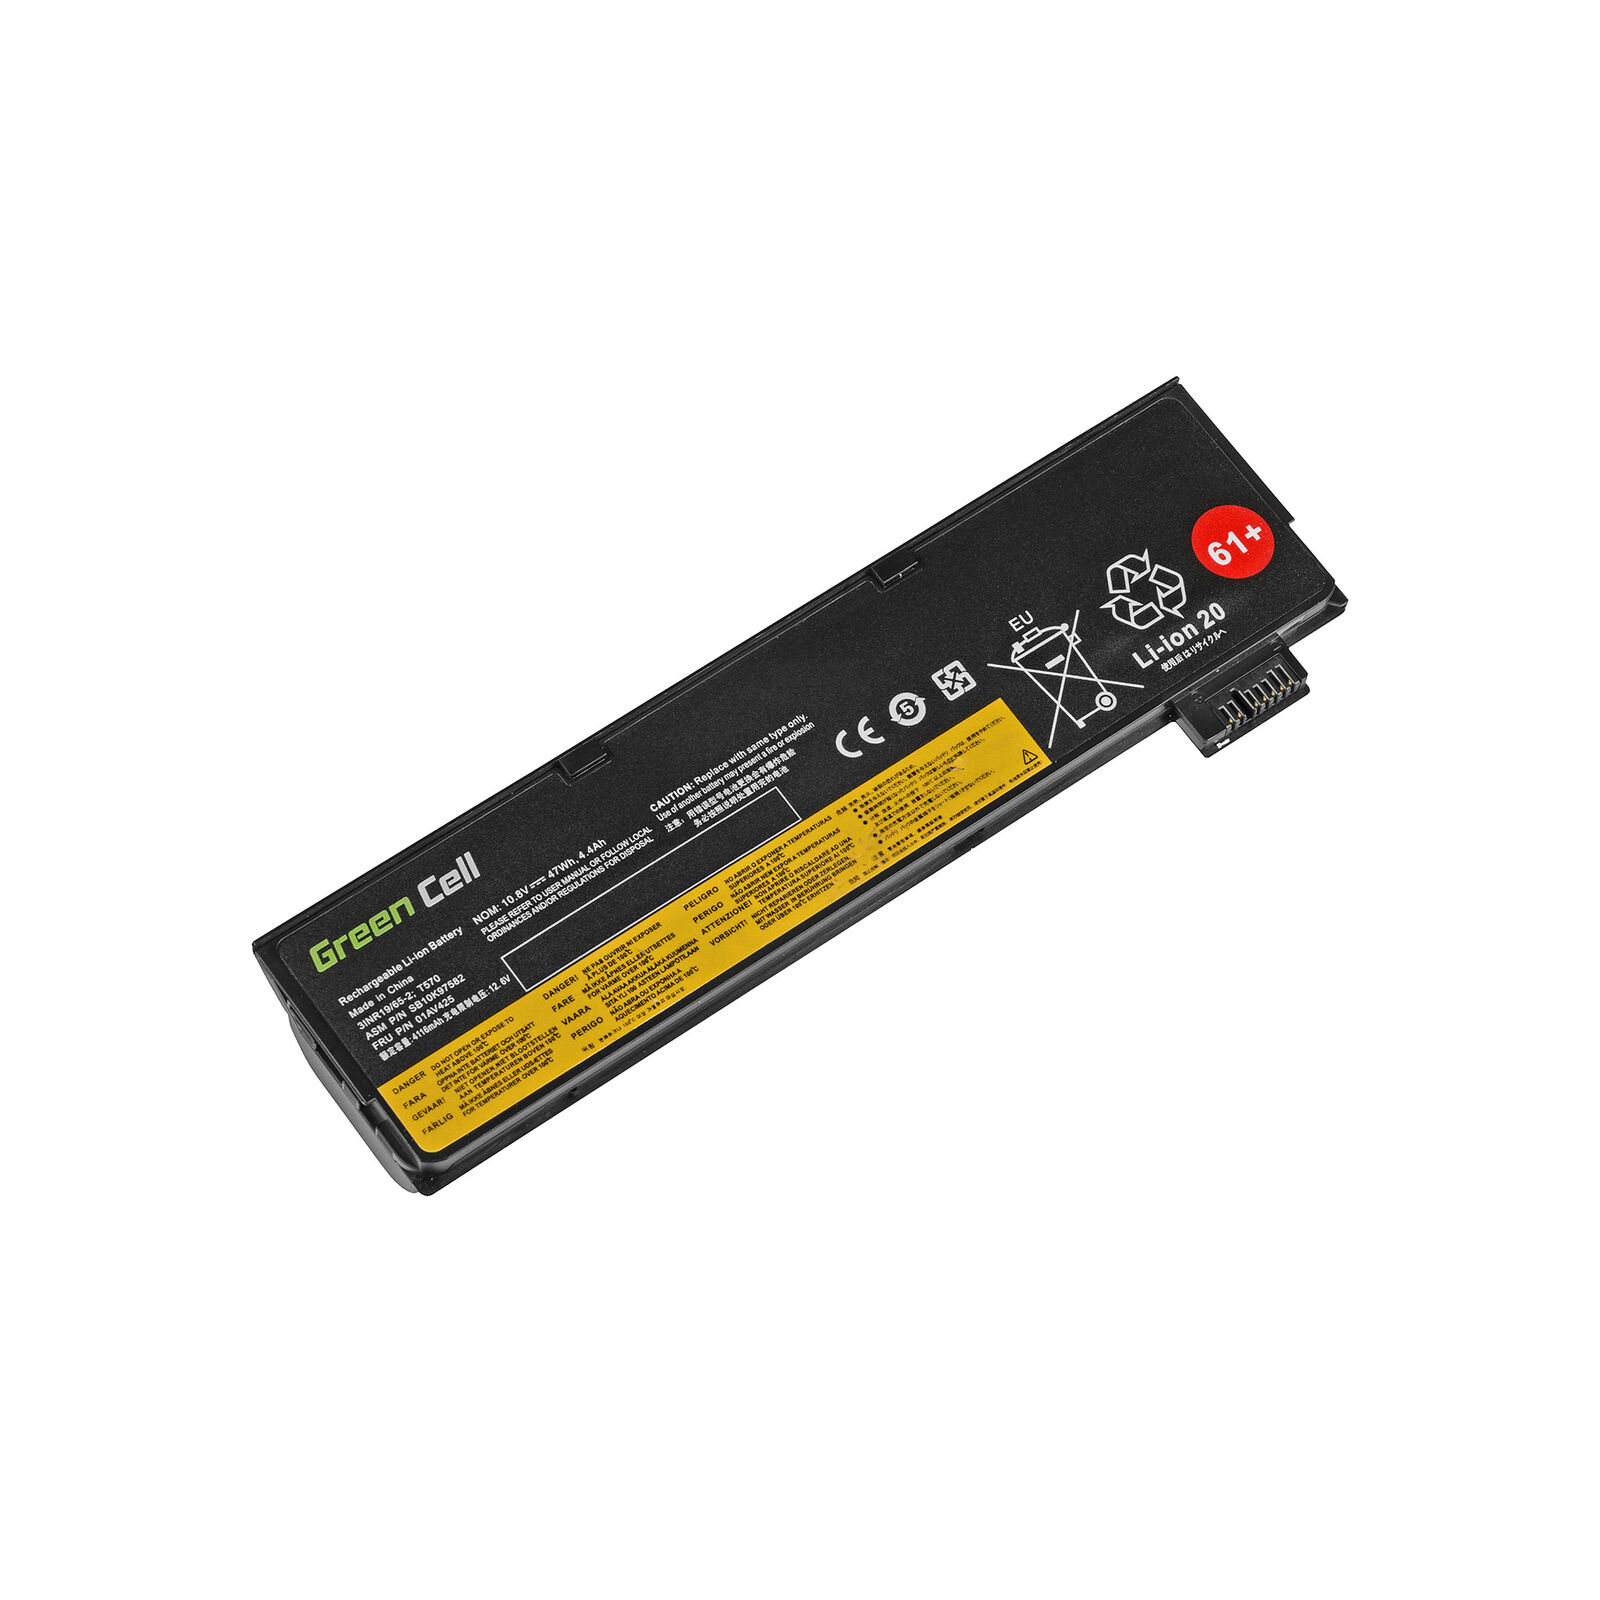 Batería para Lenovo ThinkPad A475 P51S T25 T470 T570 4400mAh(compatible)